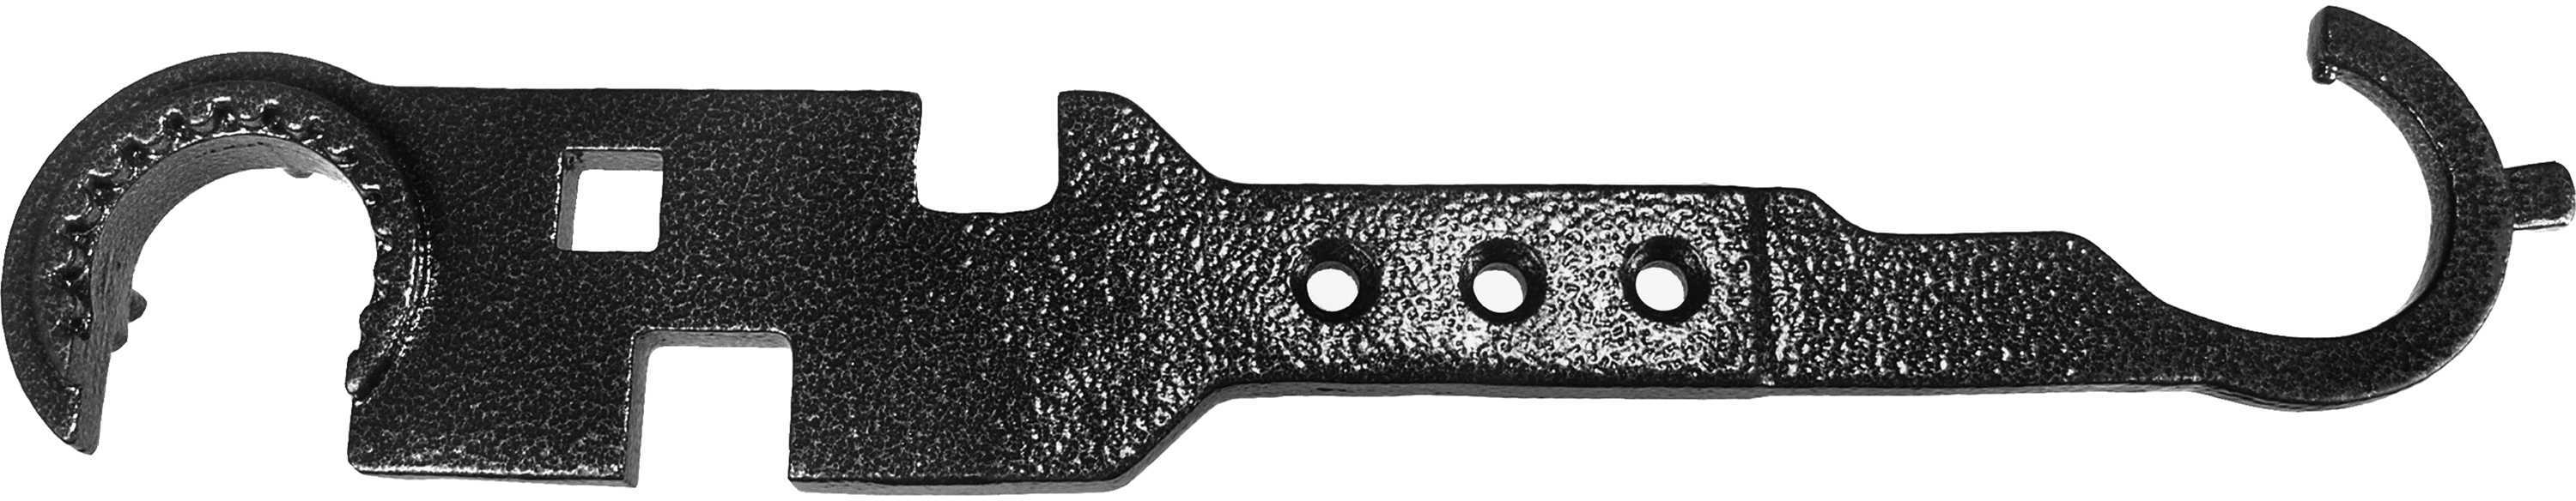 Barska Combo Wrench Tool AR15